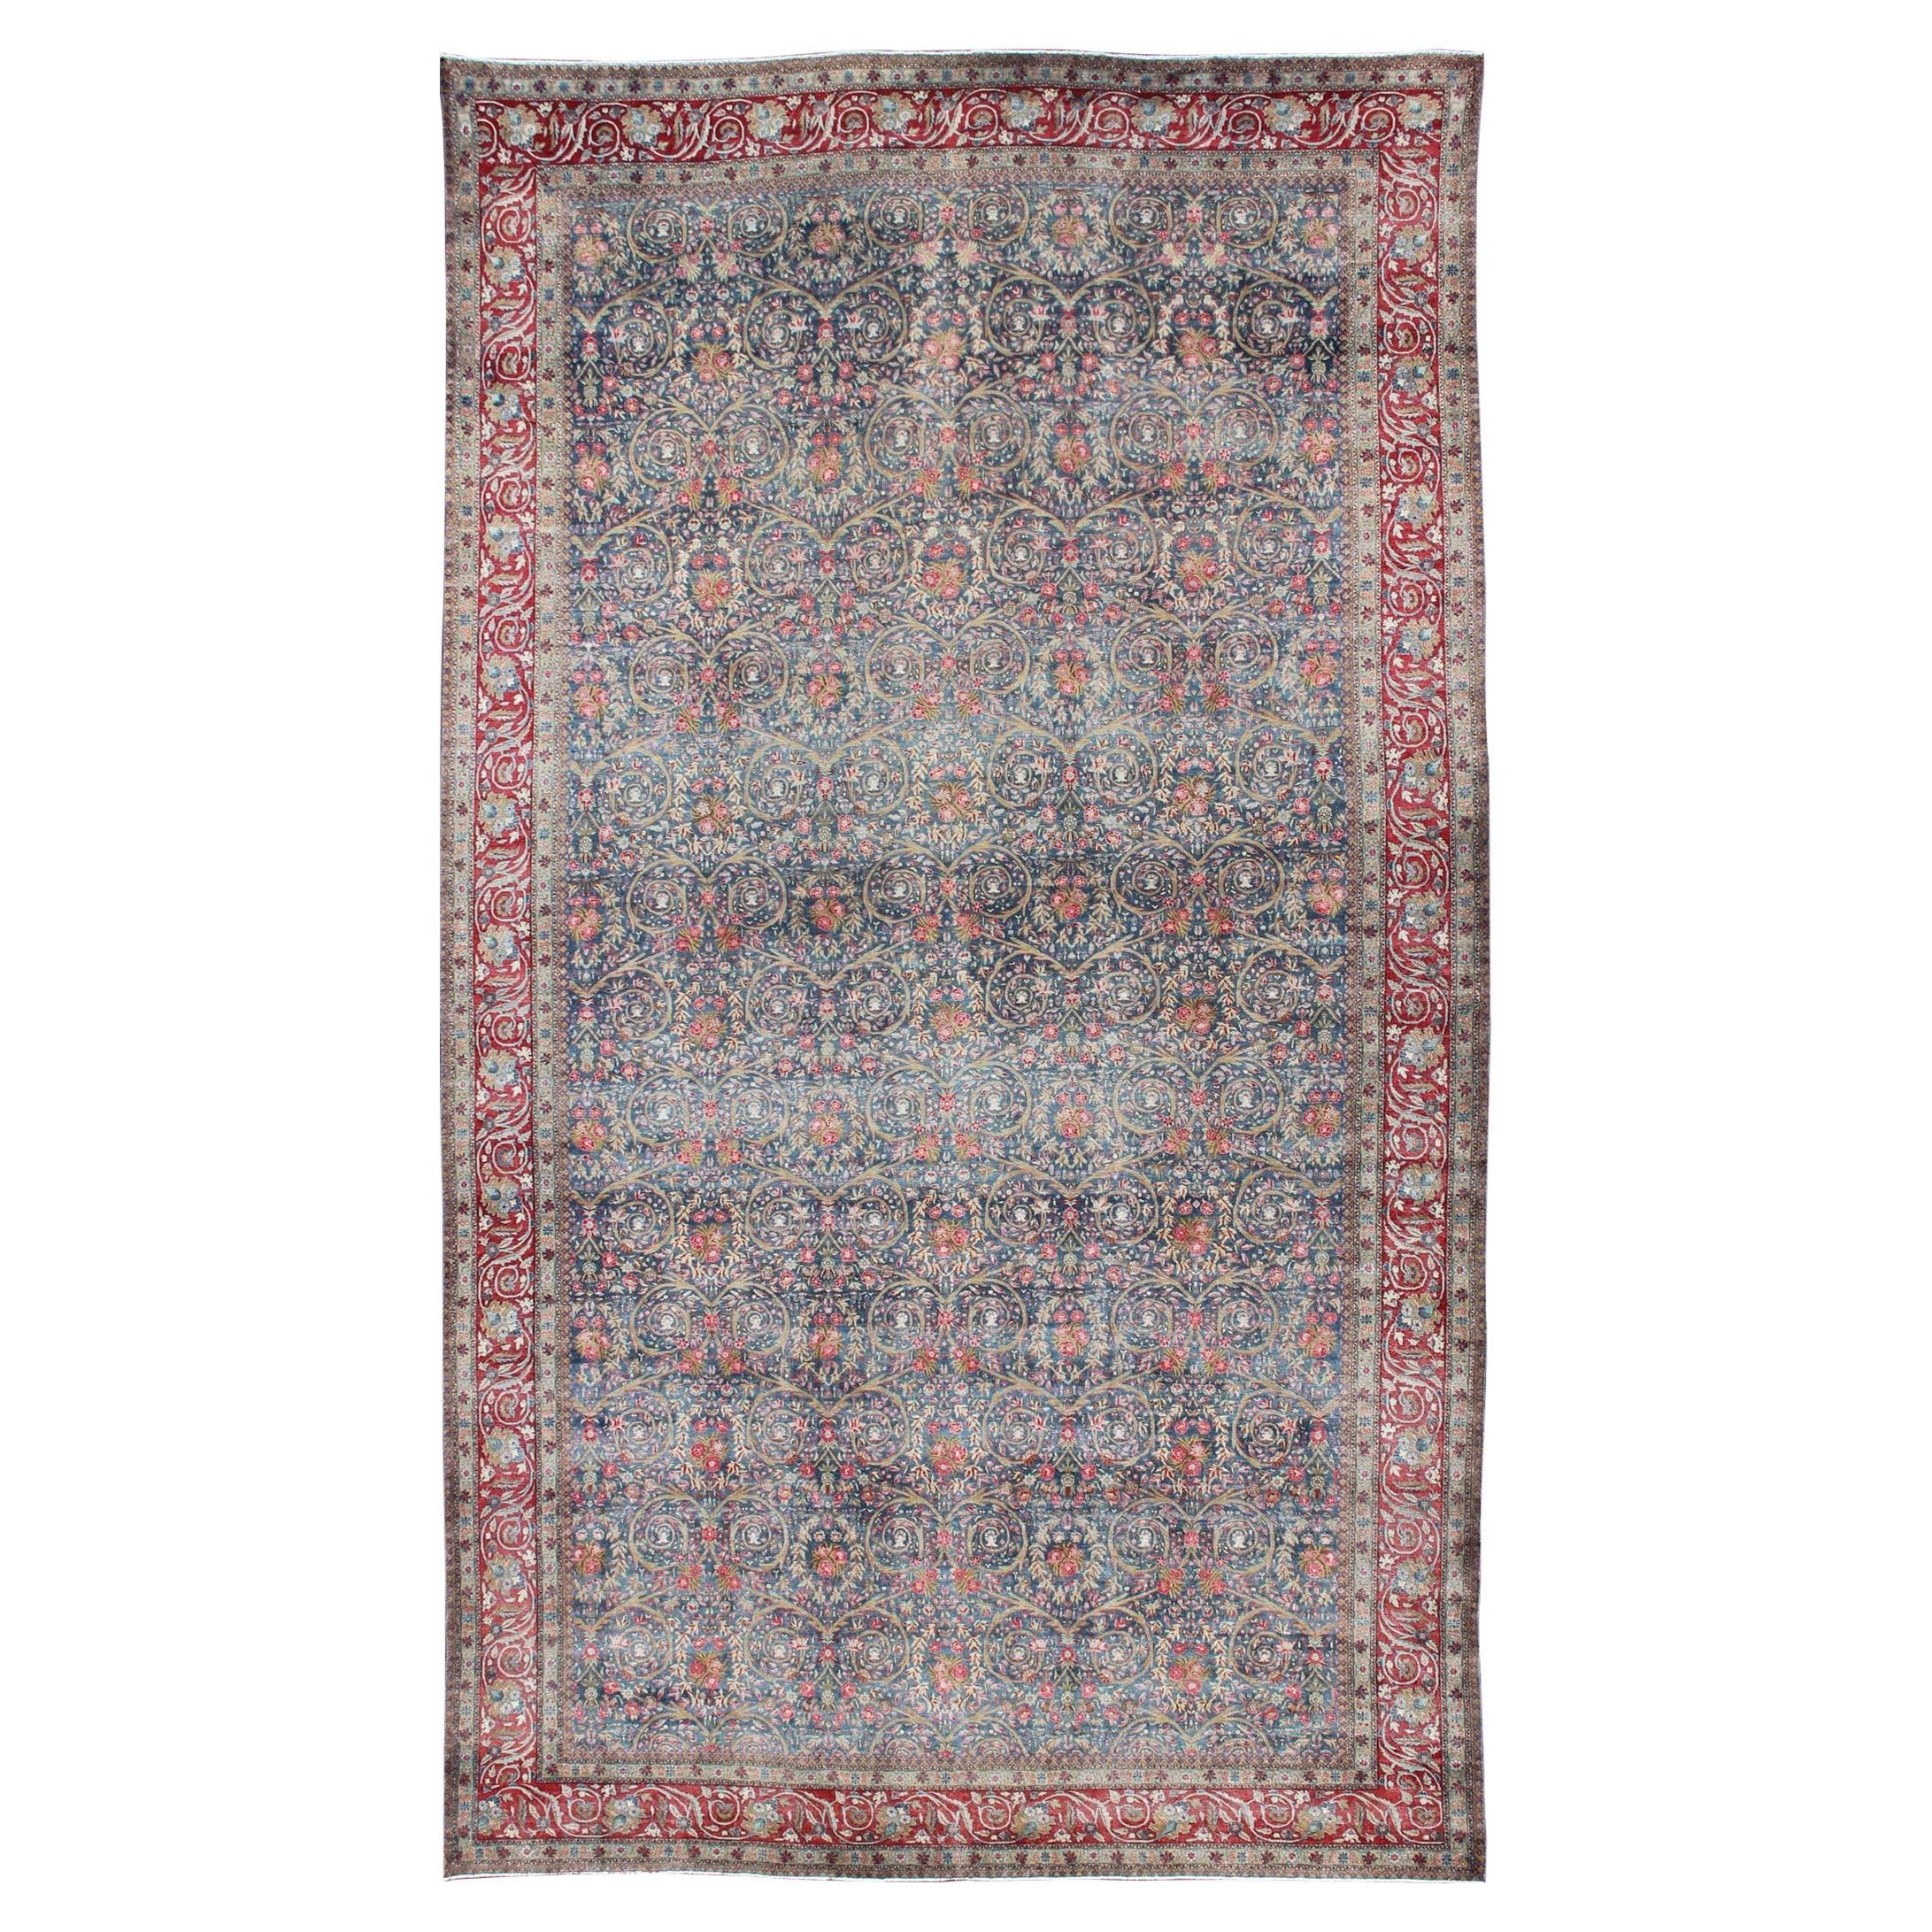 Large Antique Persian Tabriz Rug in Vine Scroll Design in Blue Background, Red For Sale